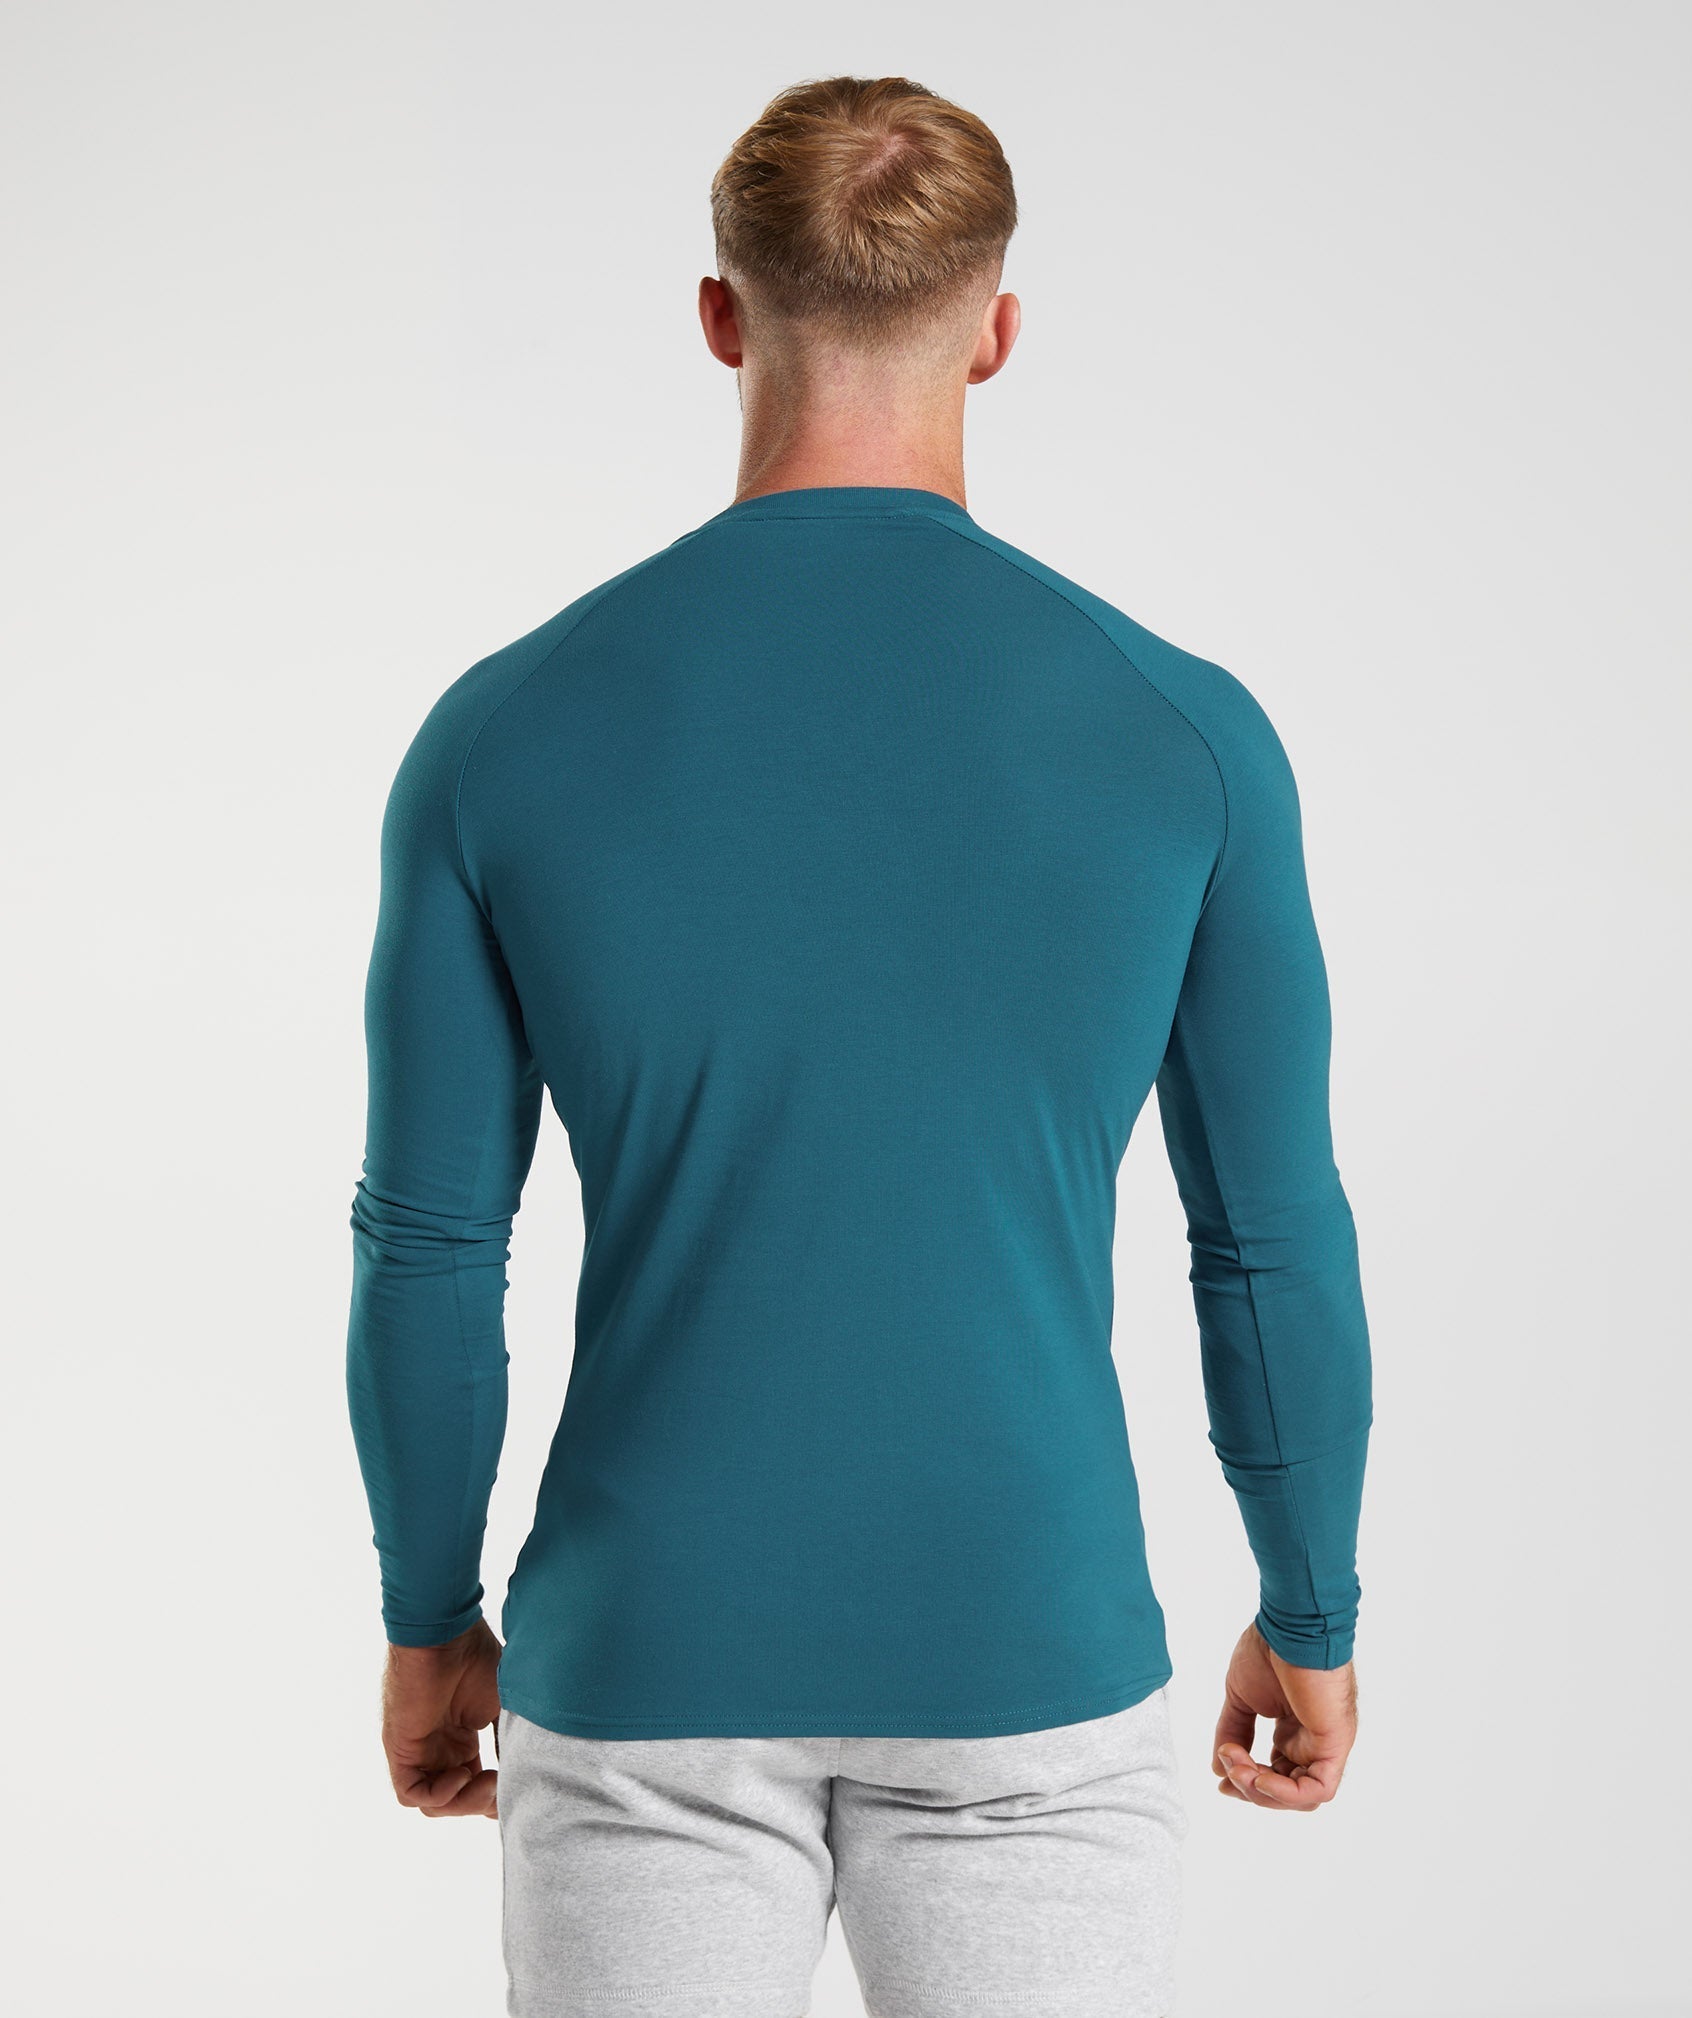 Apollo Long Sleeve T-Shirt in Atlantic Blue - view 2